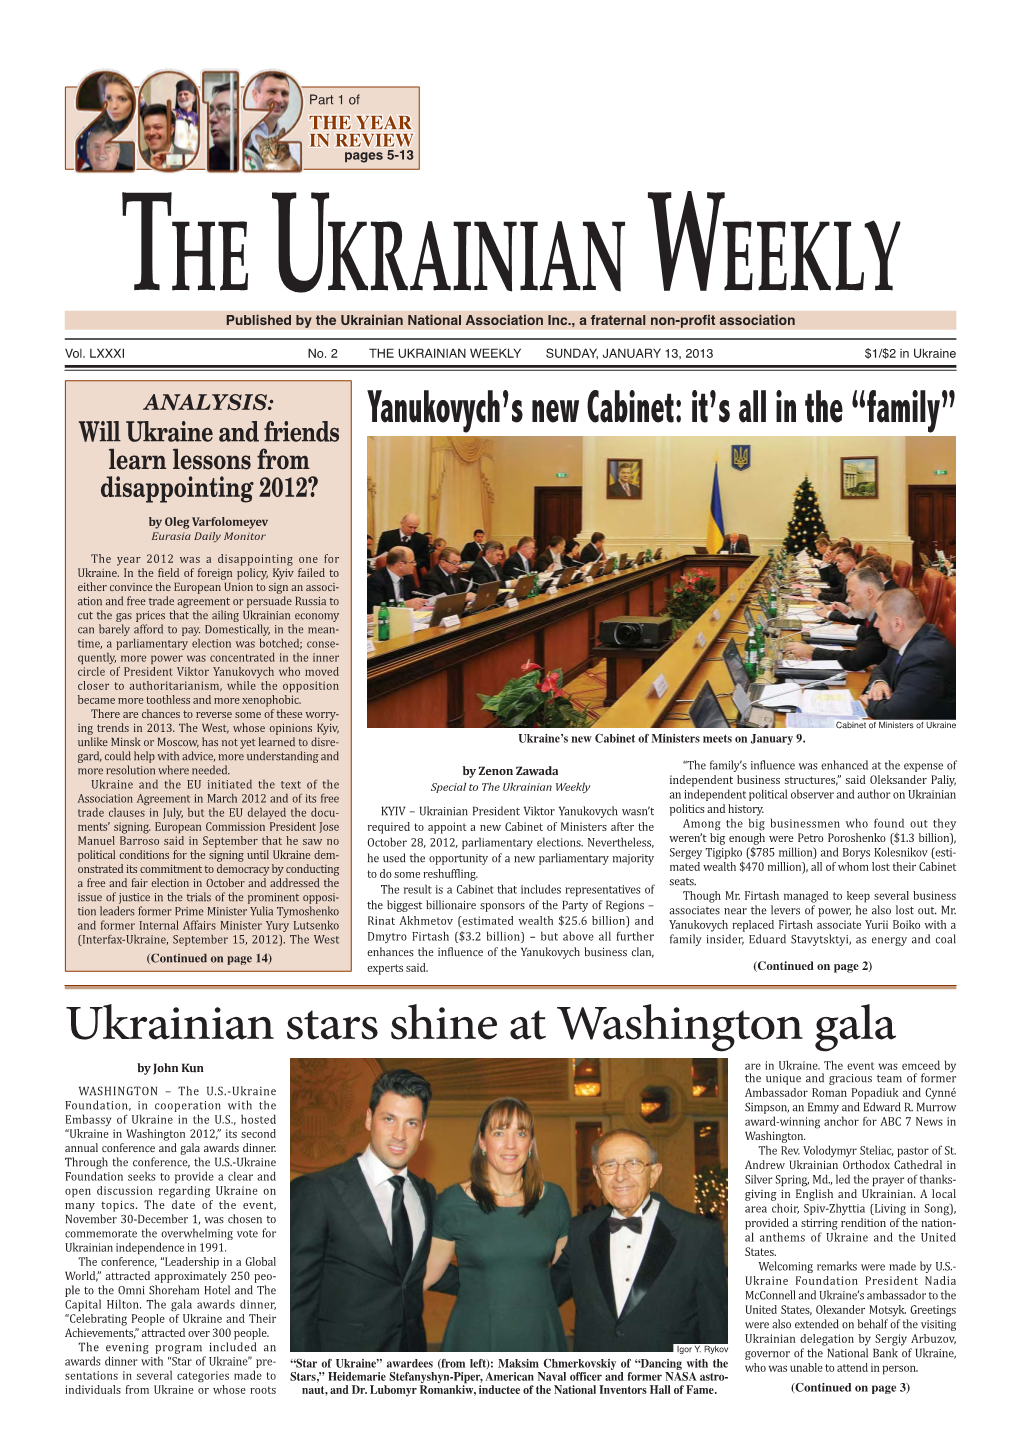 The Ukrainian Weekly 2013, No.2